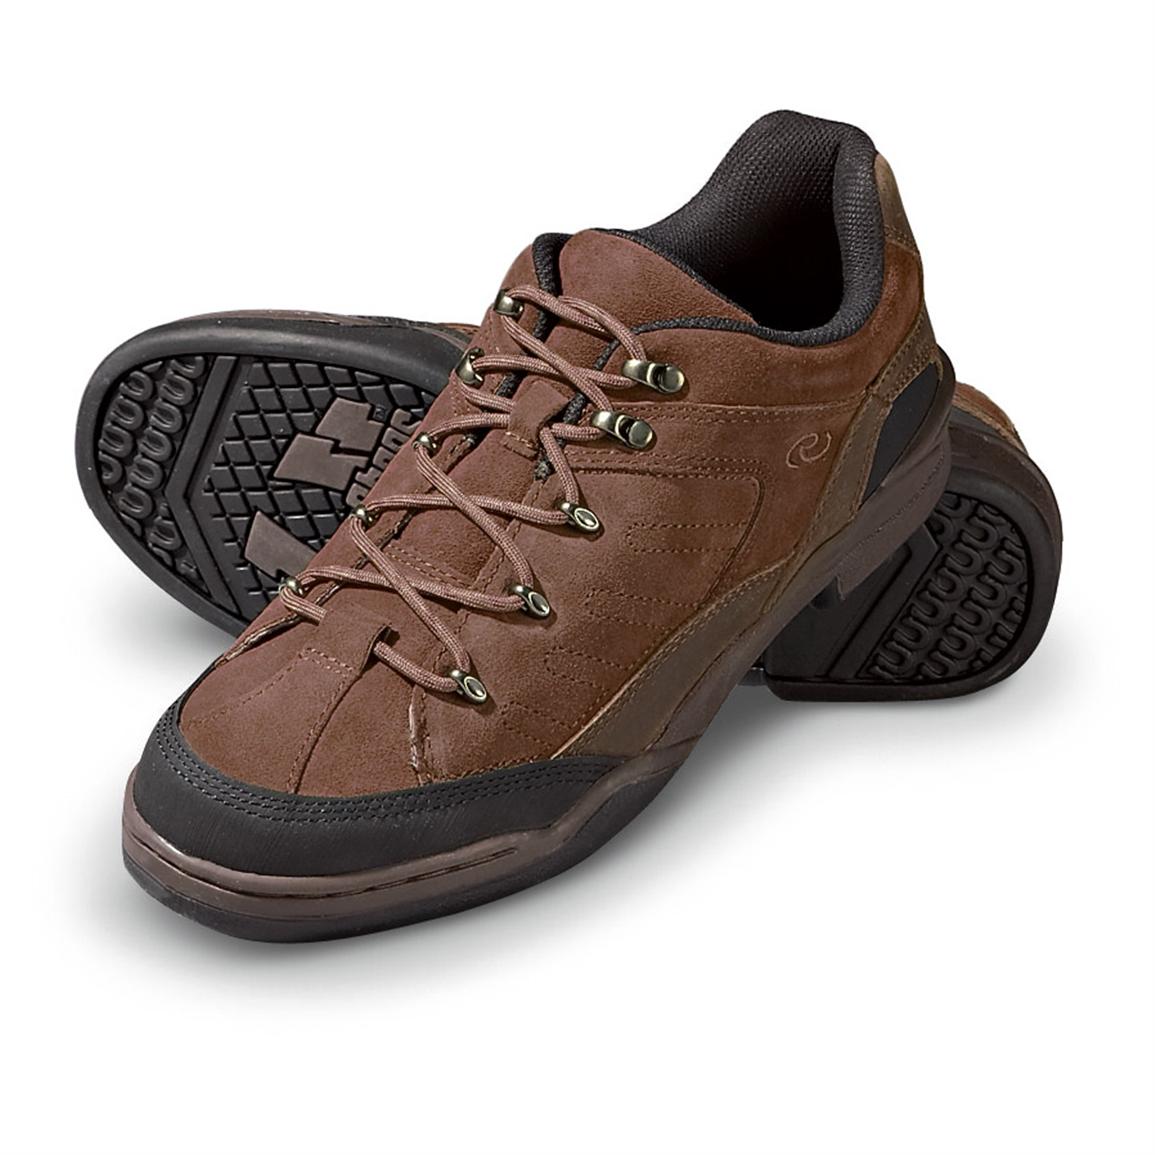 Men's Roper® Horseshoe Low, Tan - 166400, Casual Shoes at Sportsman's Guide